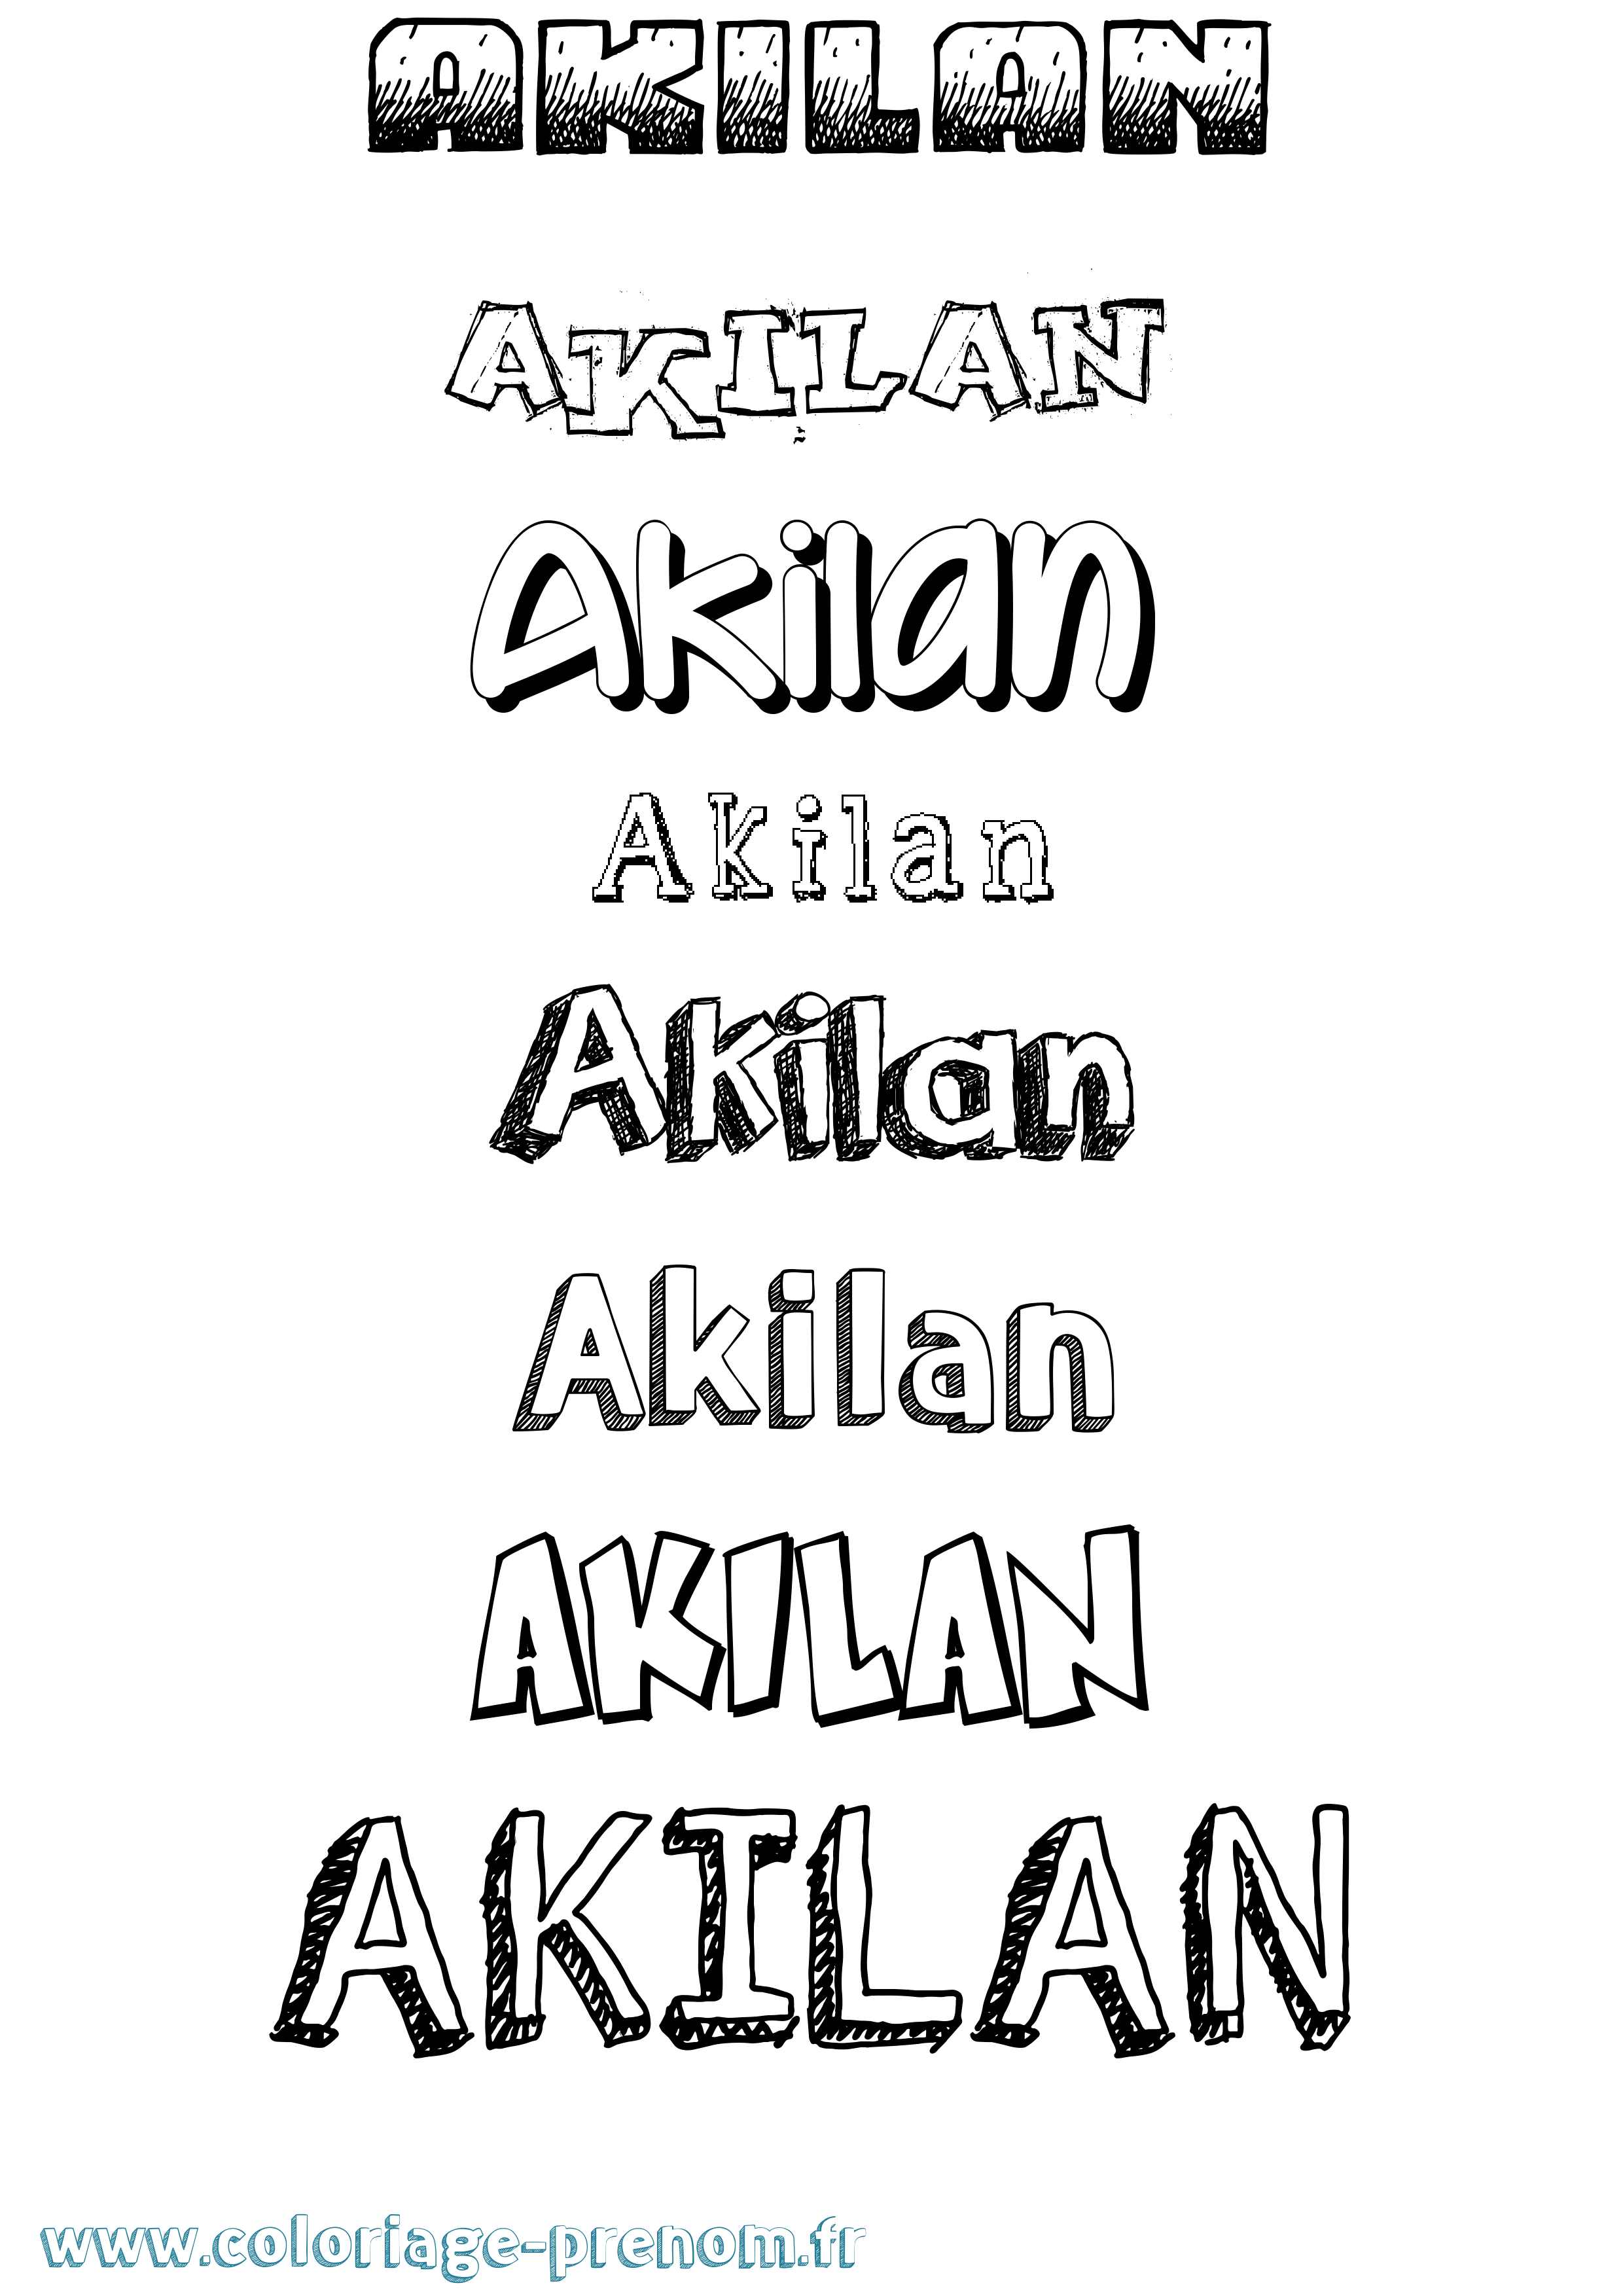 Coloriage prénom Akilan Dessiné